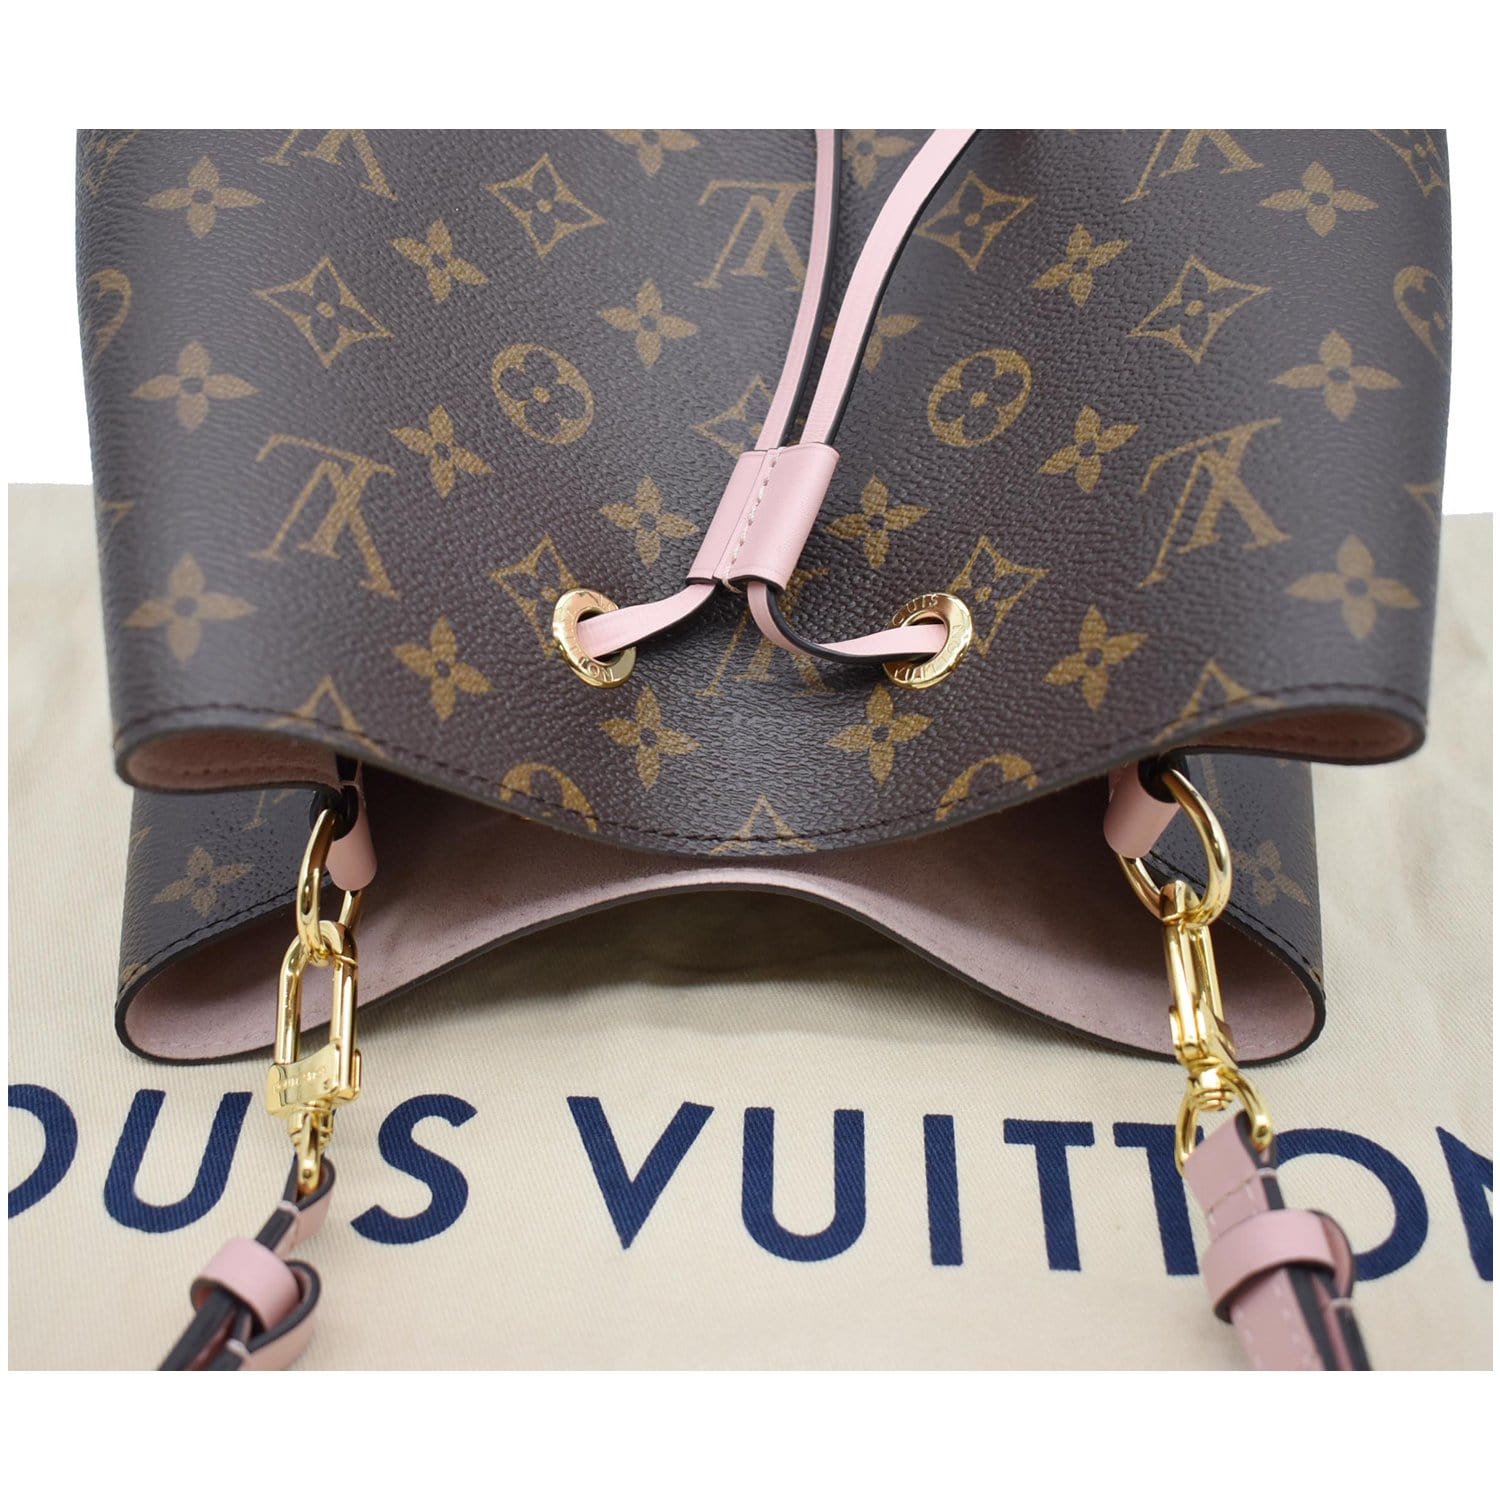 Louis Vuitton Damier Ebene Neonoe Shoulder Bag, Louis Vuitton Handbags